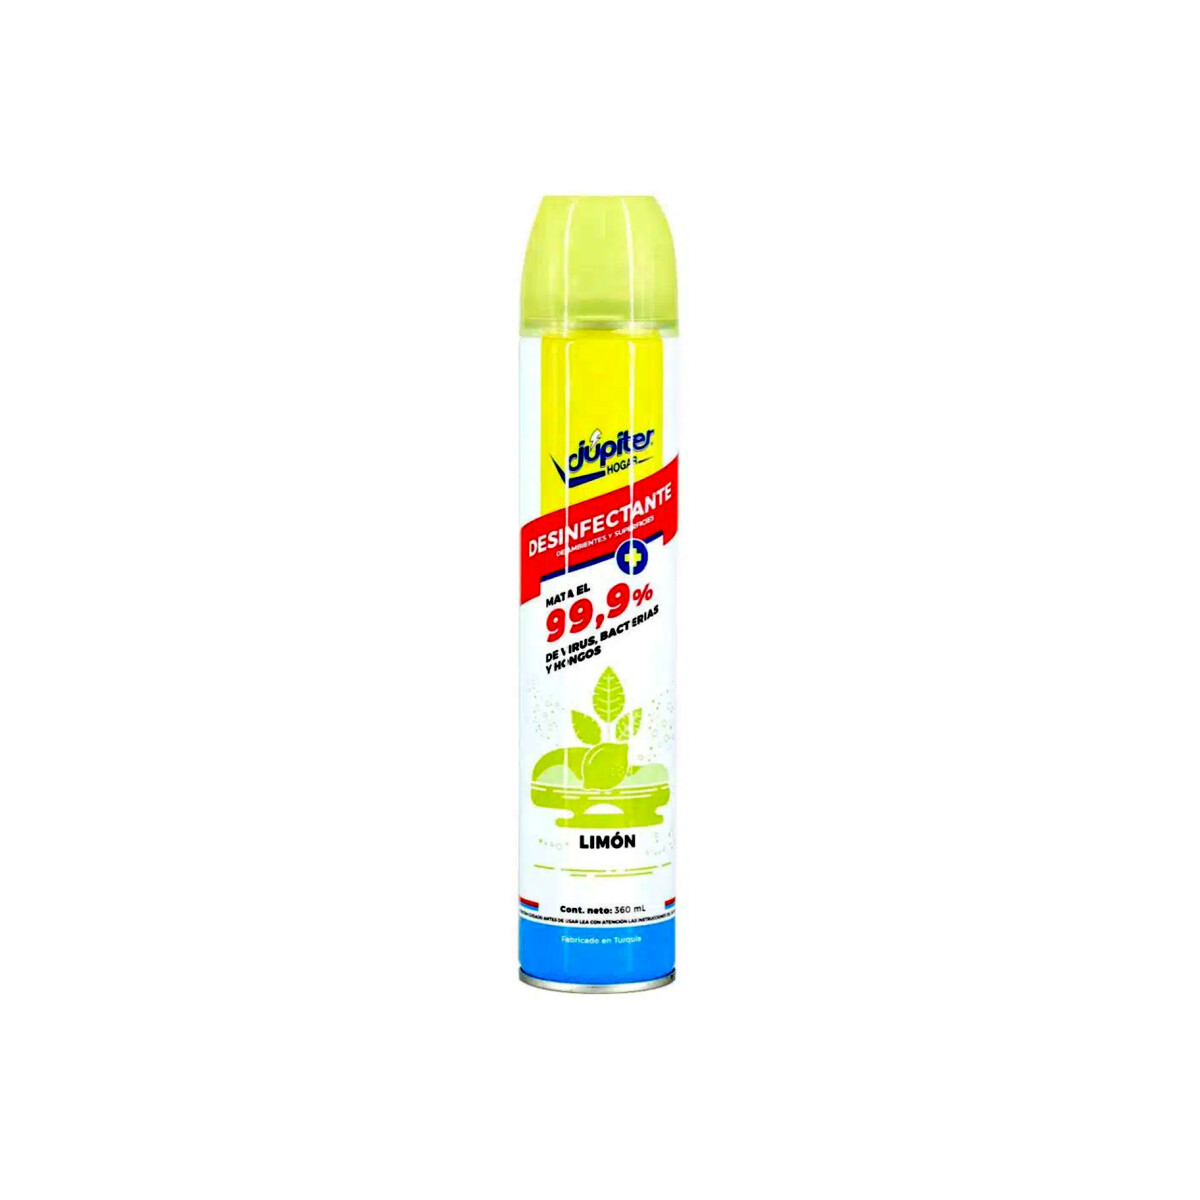 Desinfectante JUPITER 99.9% Aerosol 360ml - Limón 